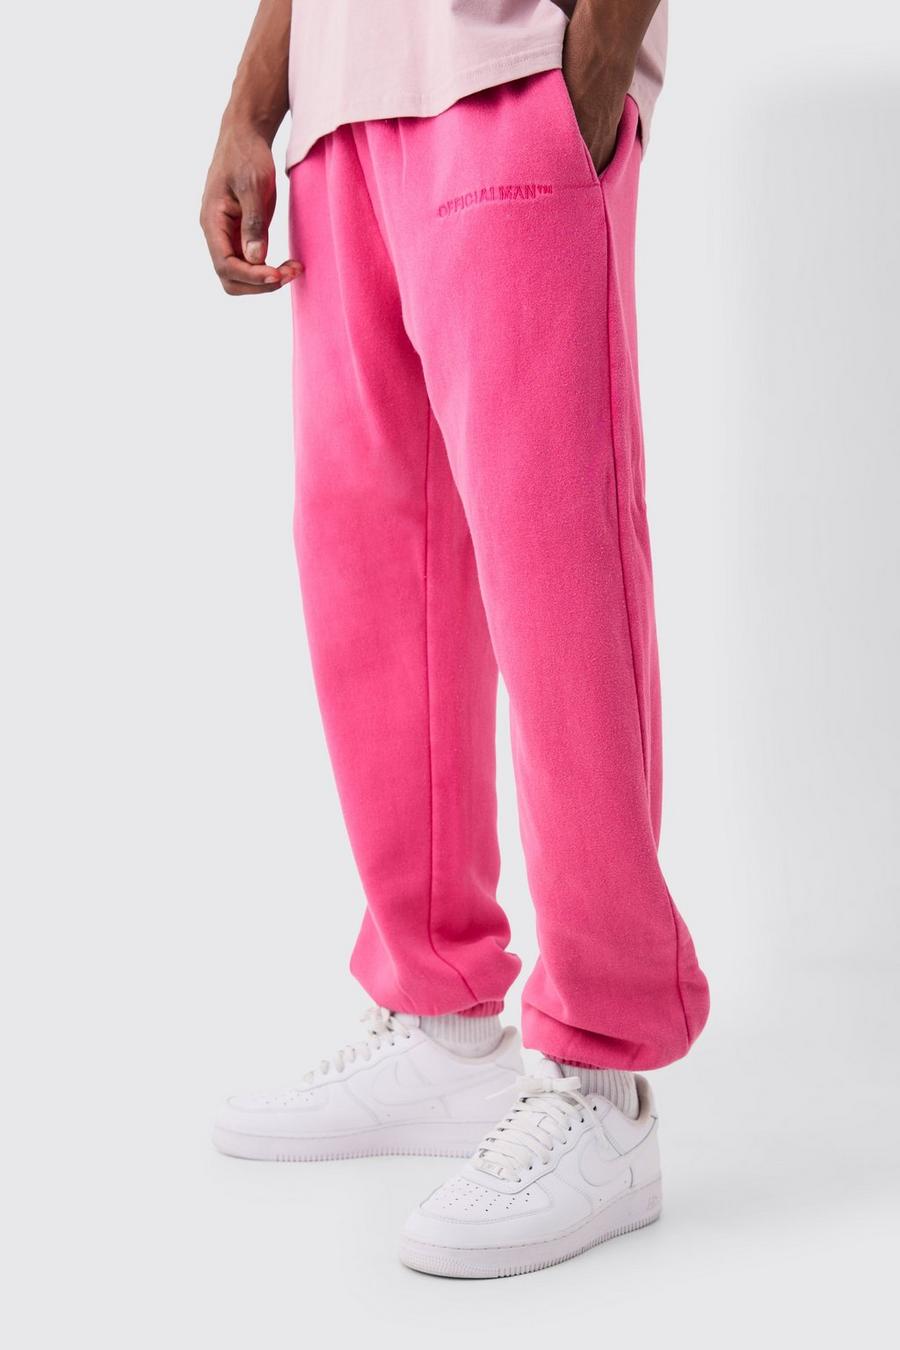 Pantaloni tuta Core Fit Official slavati, Pink